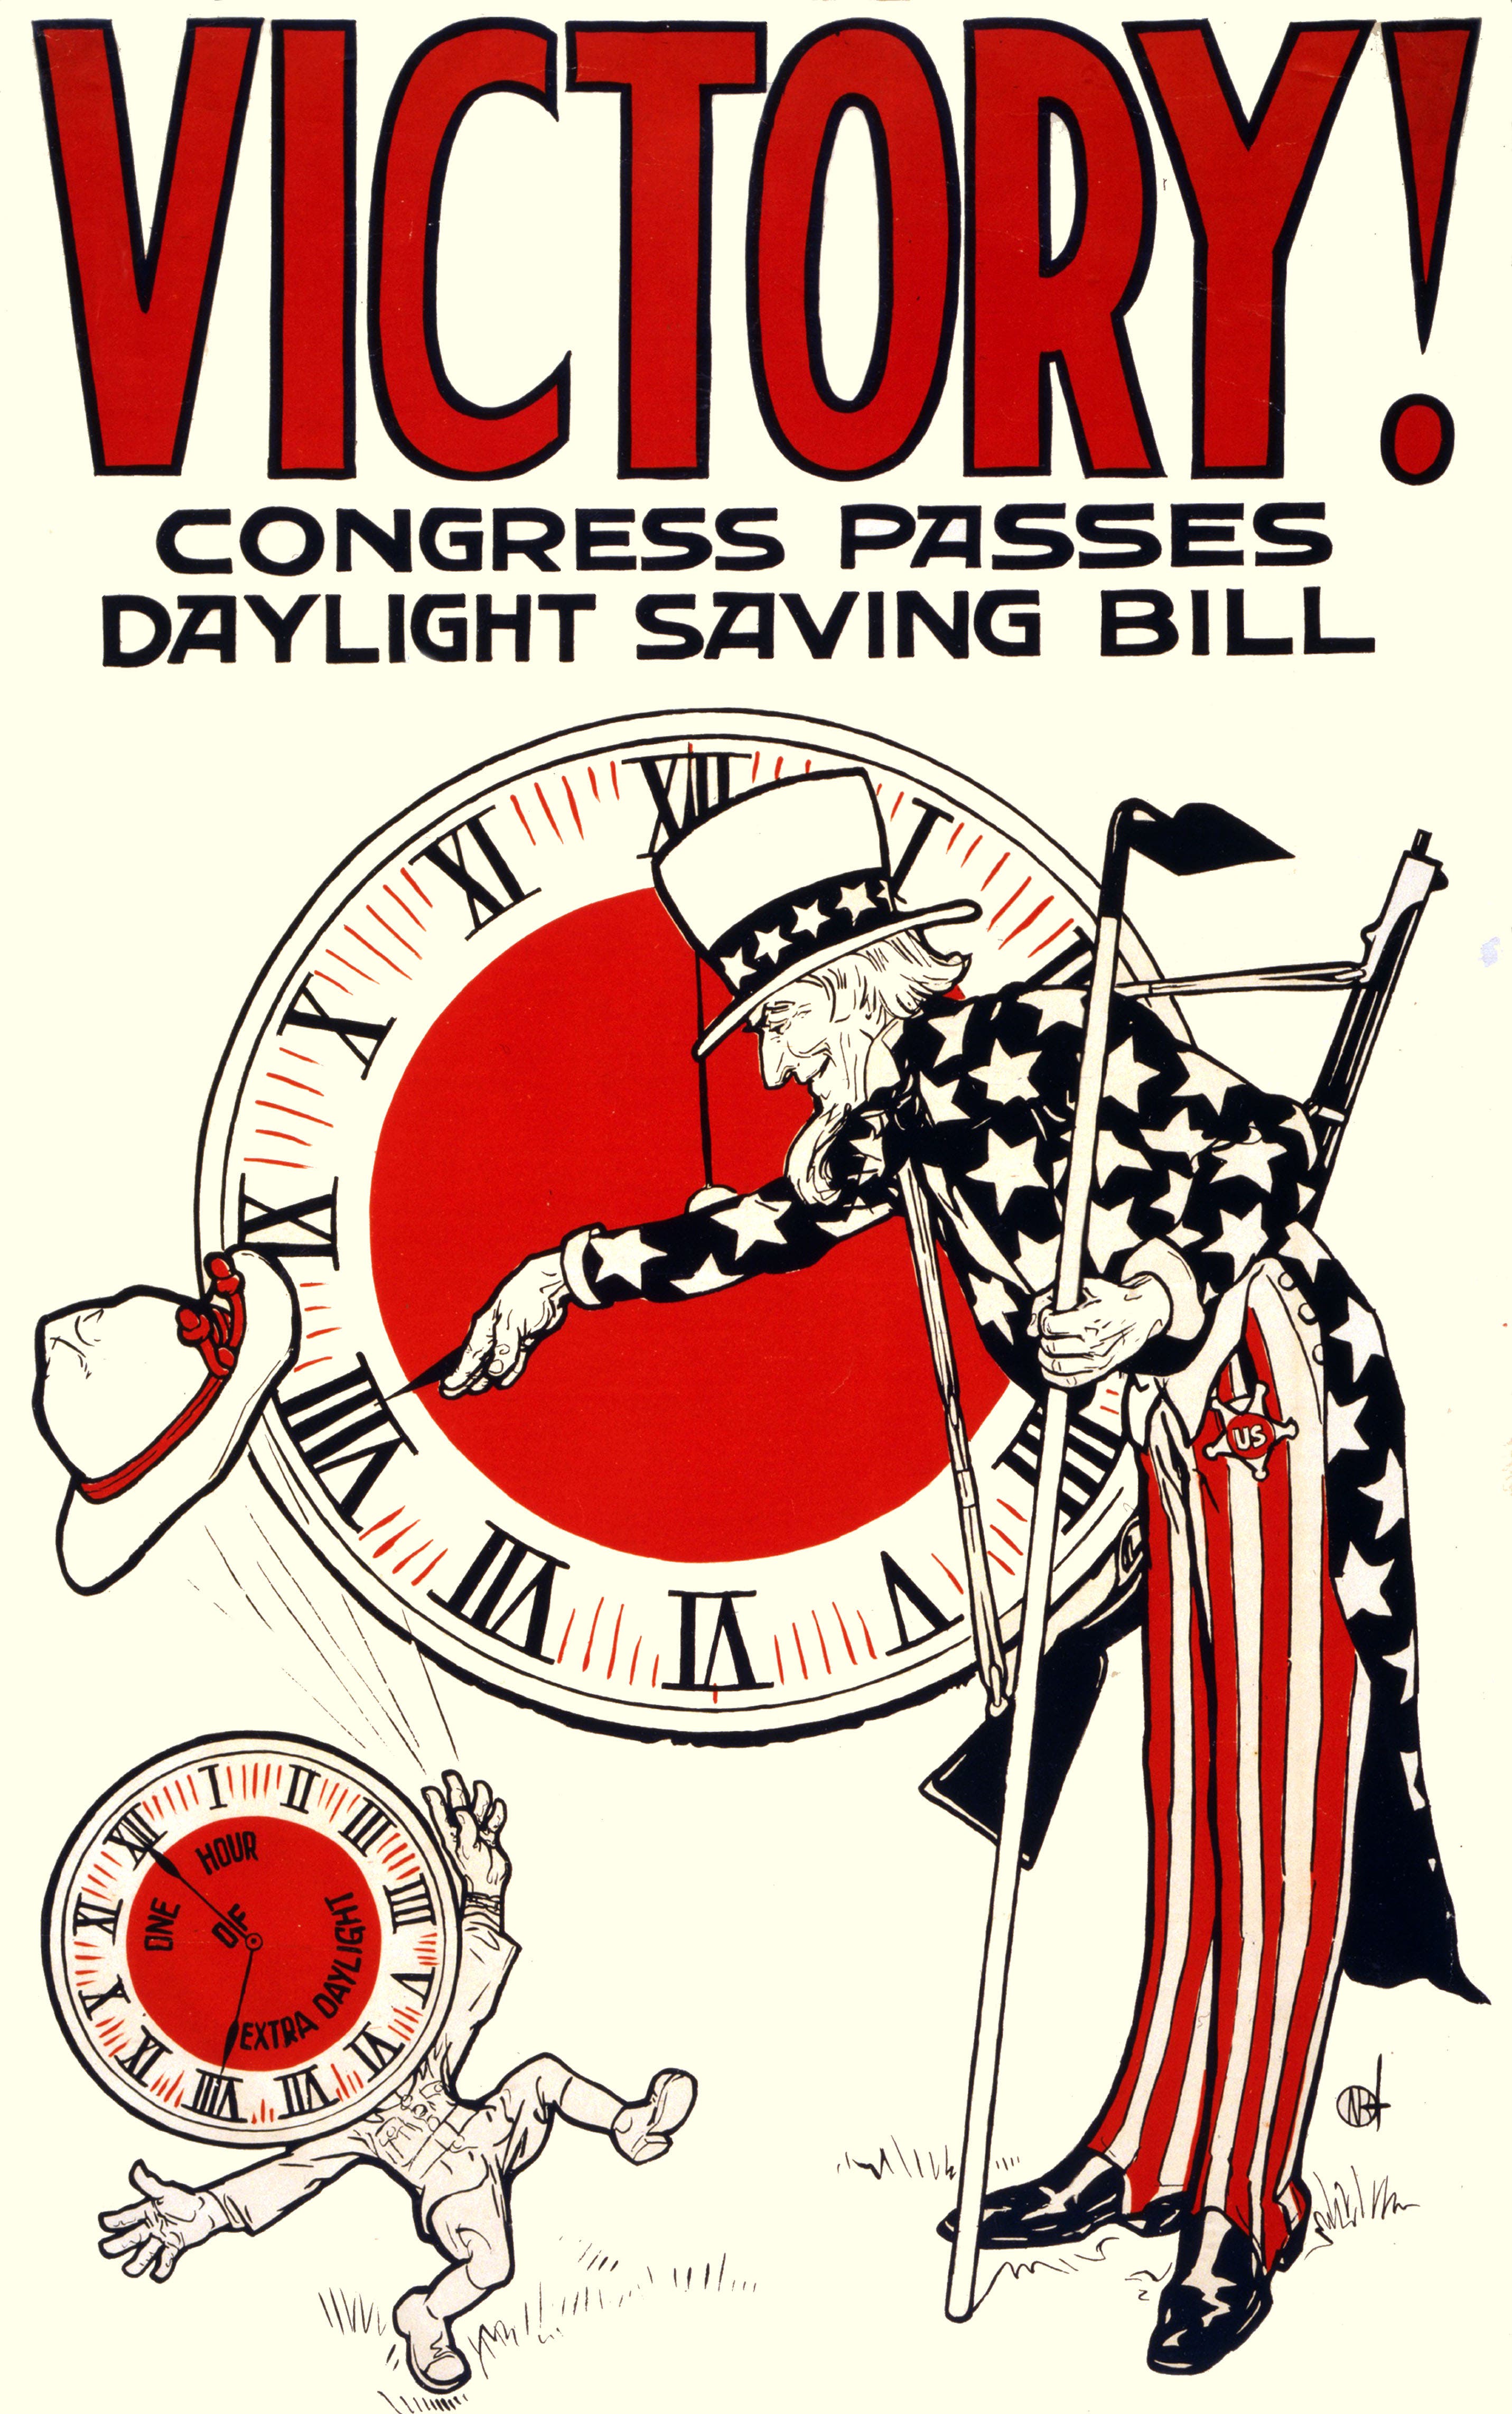 1918 Daylight Savings Bill Poster